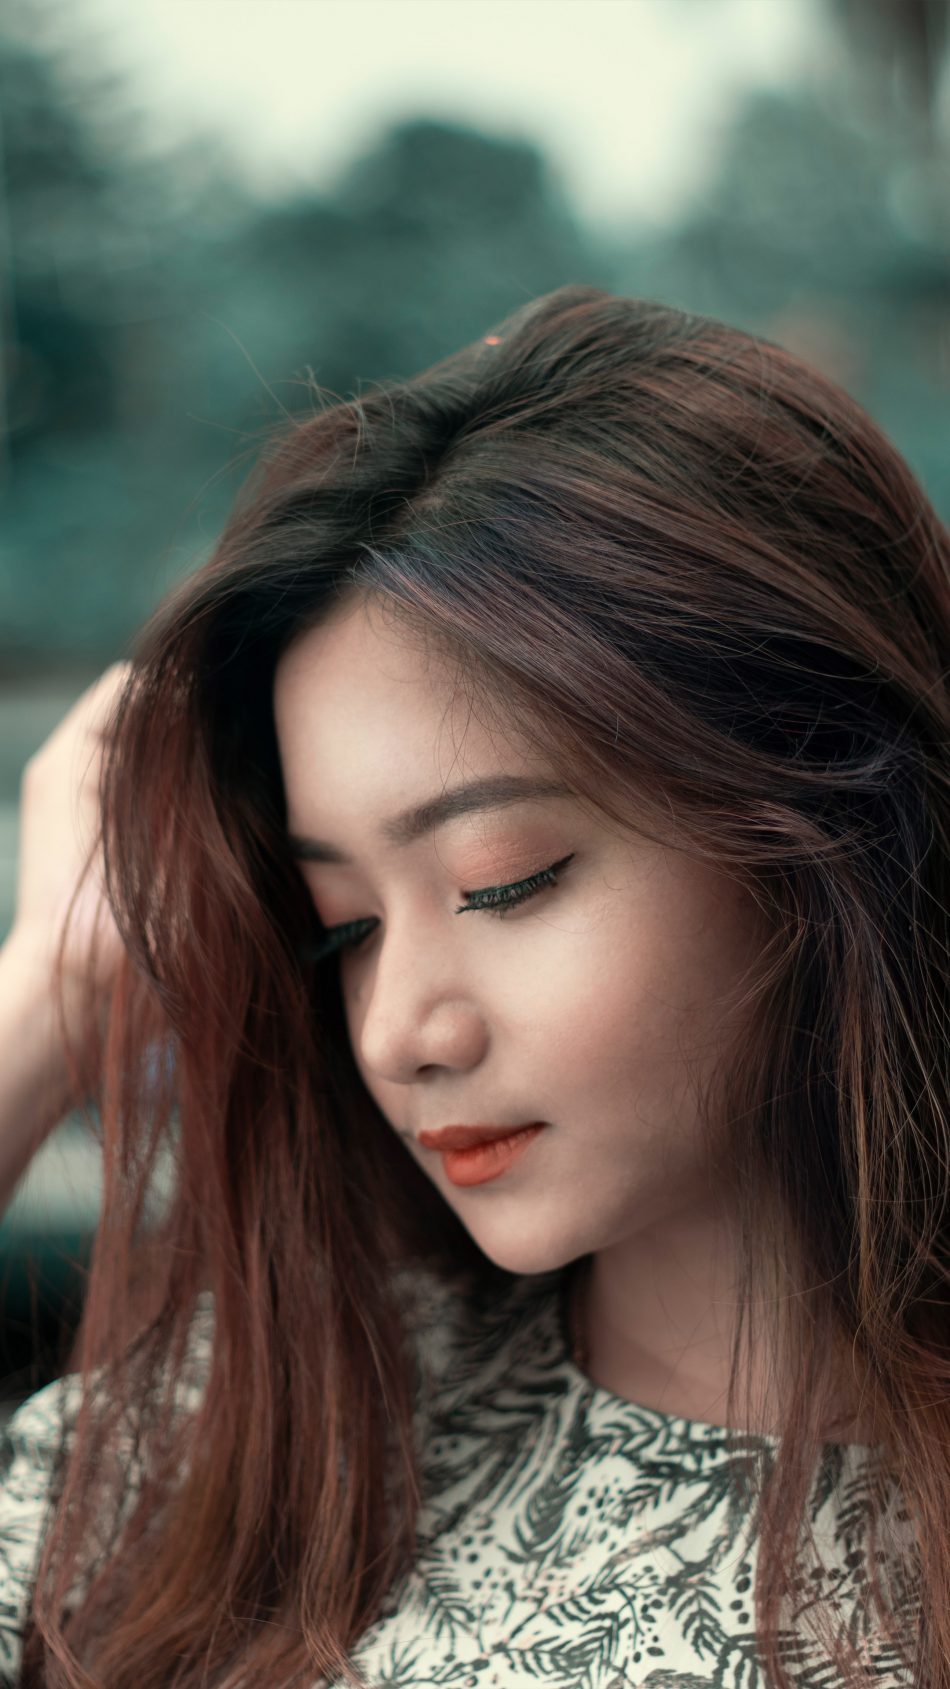 https://www.mordeo.org/files/uploads/2019/05/Beautiful-Asian-Girl-Portrait-Photography-4K-Ultra-HD-Mobile-Wallpaper-950x1689.jpg